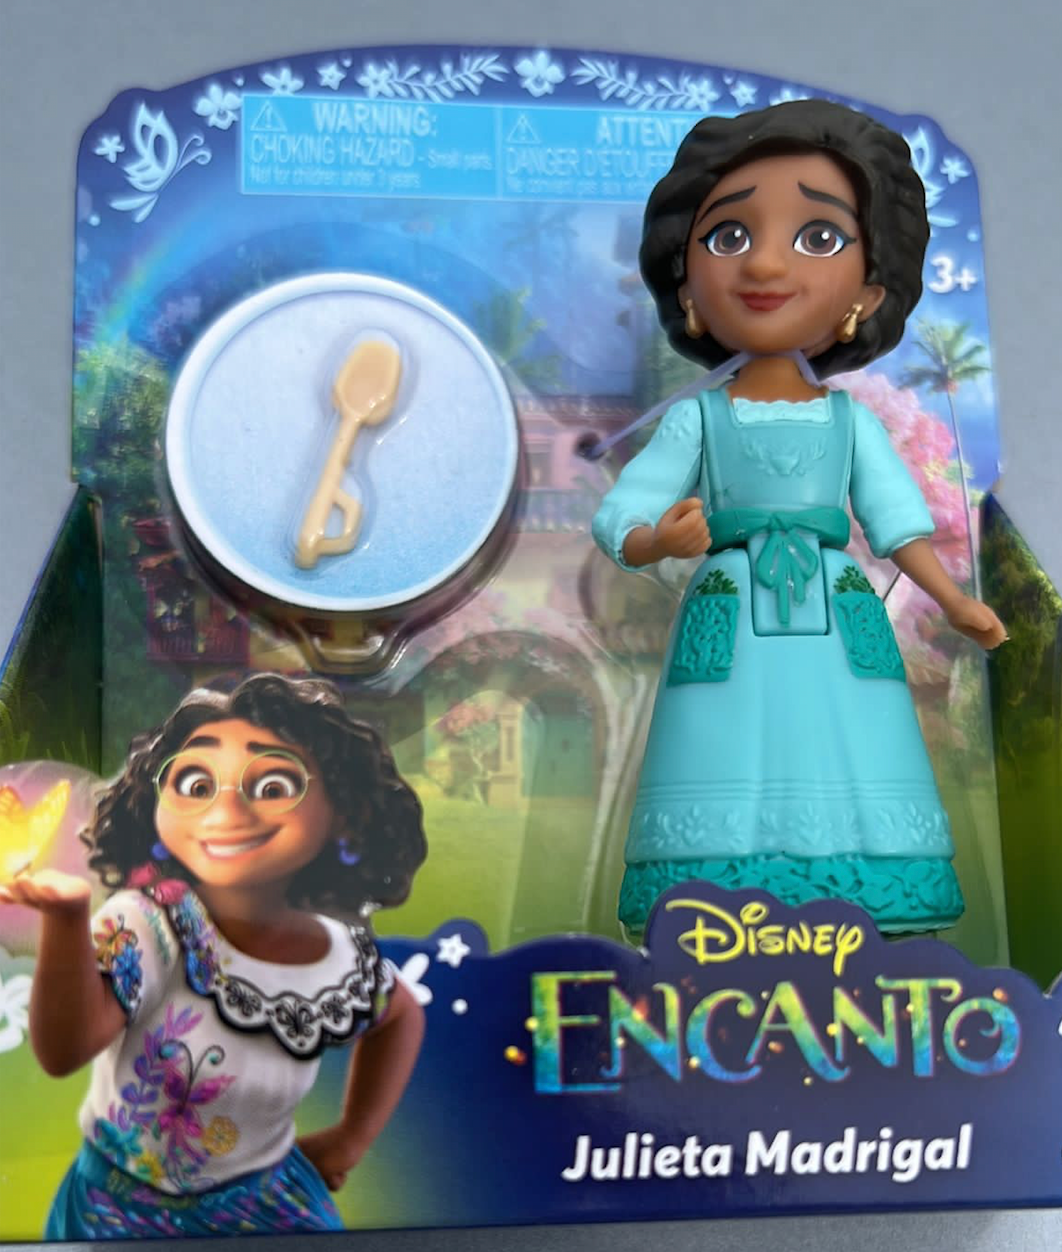 Disney Encanto Julieta Madrigal Small Doll Toy New with Box